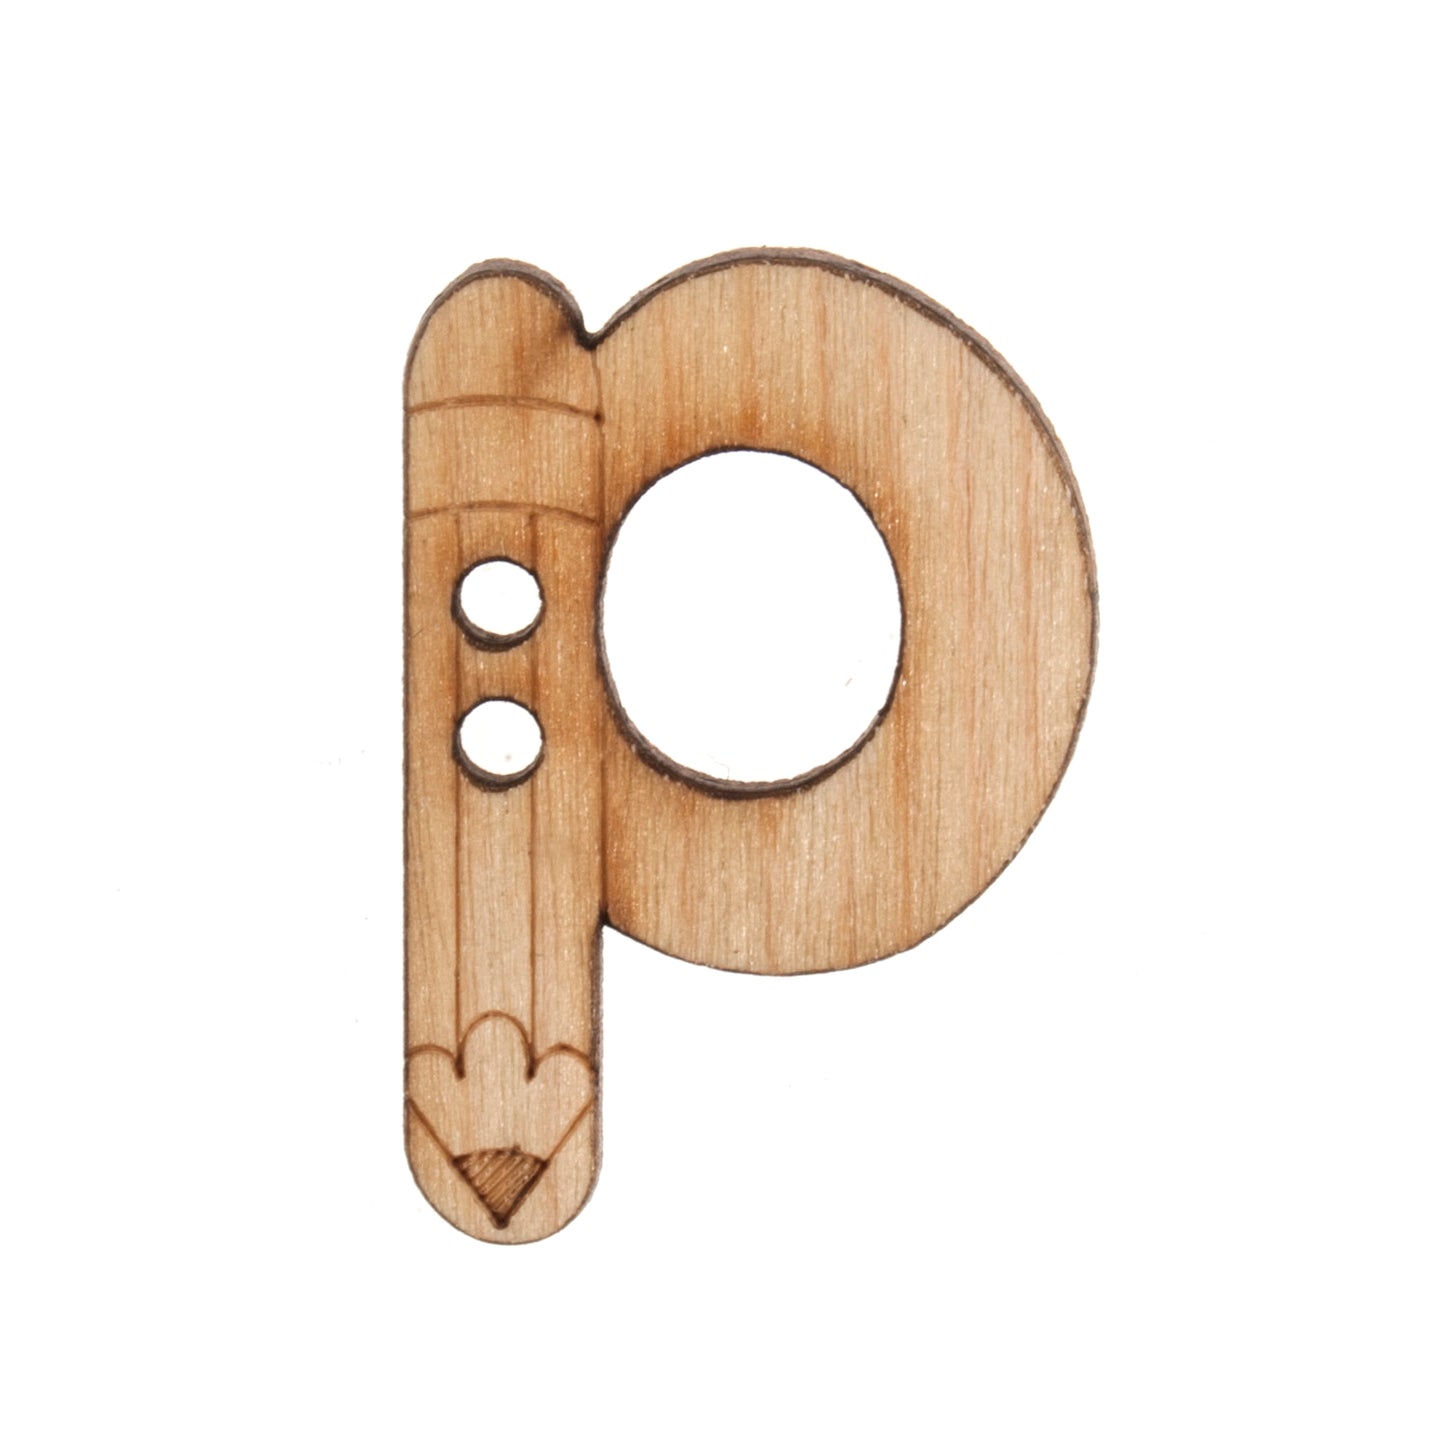 Wooden Alphabet Craft 2 Hole Button - 20mm - Letter P [LD21.7]